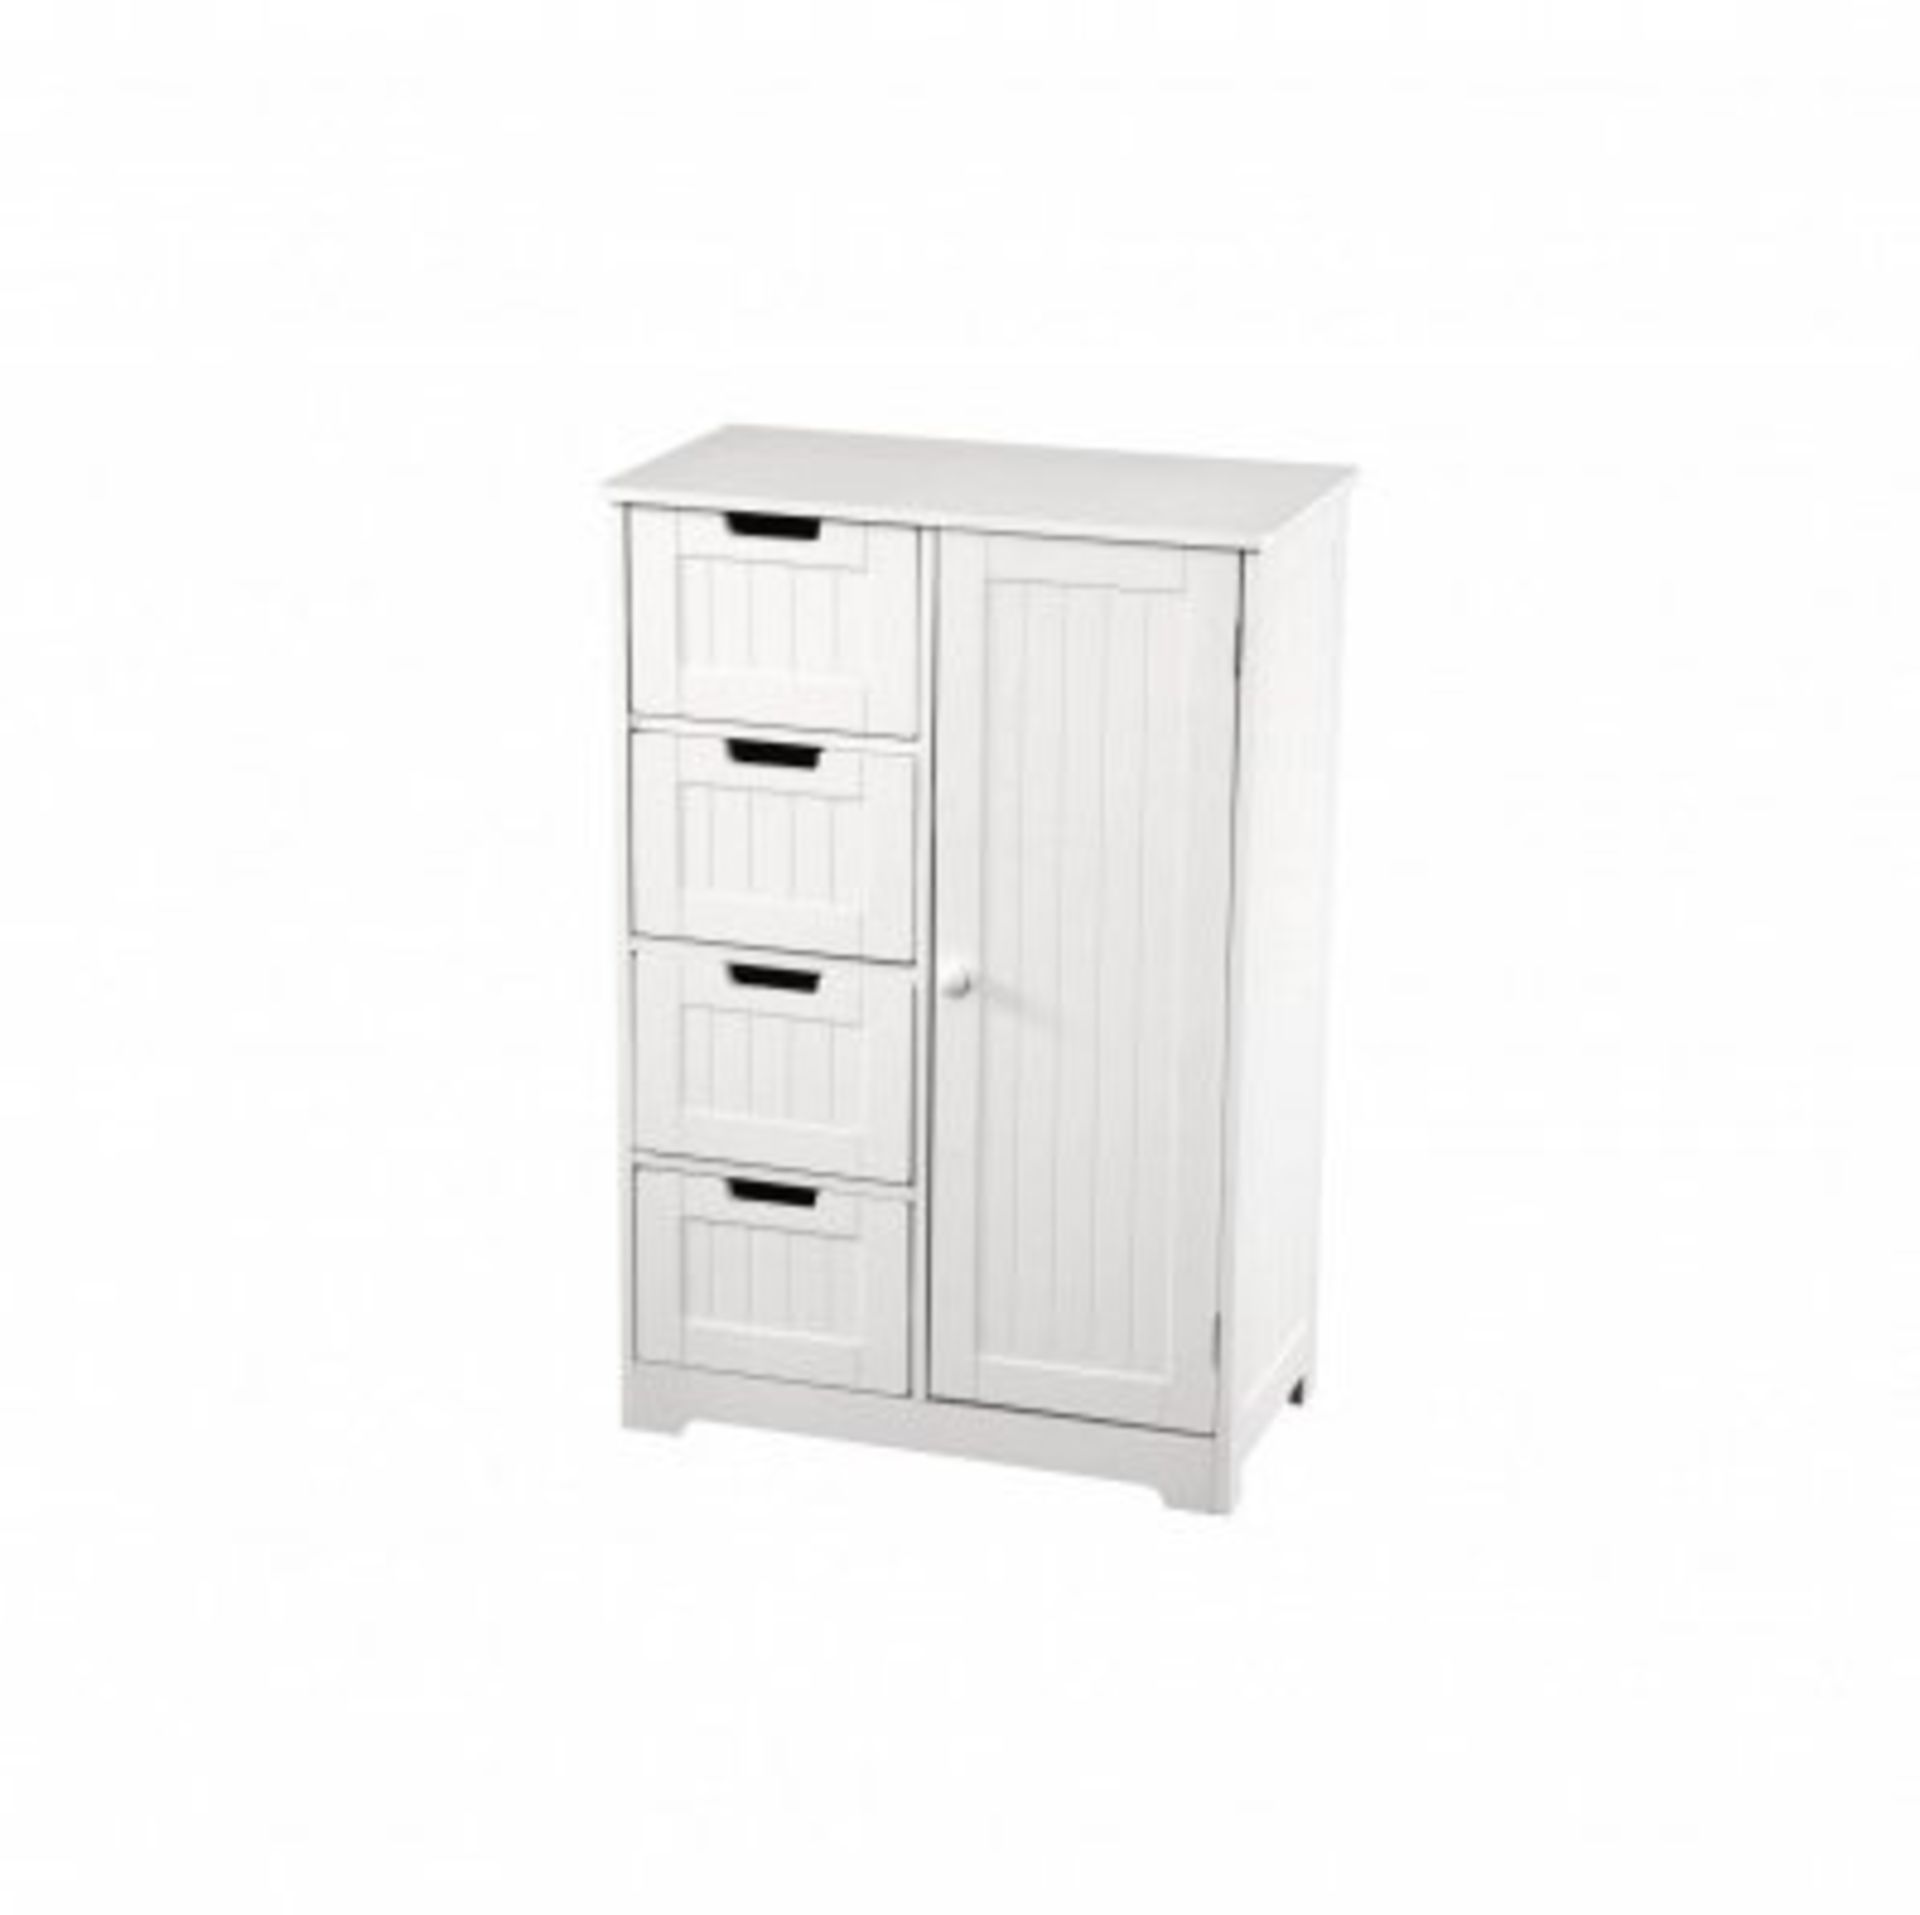 (KK63) White Hallway Bathroom Unit Cupboard Shelf Storage Free Standing with Drawers Add st...